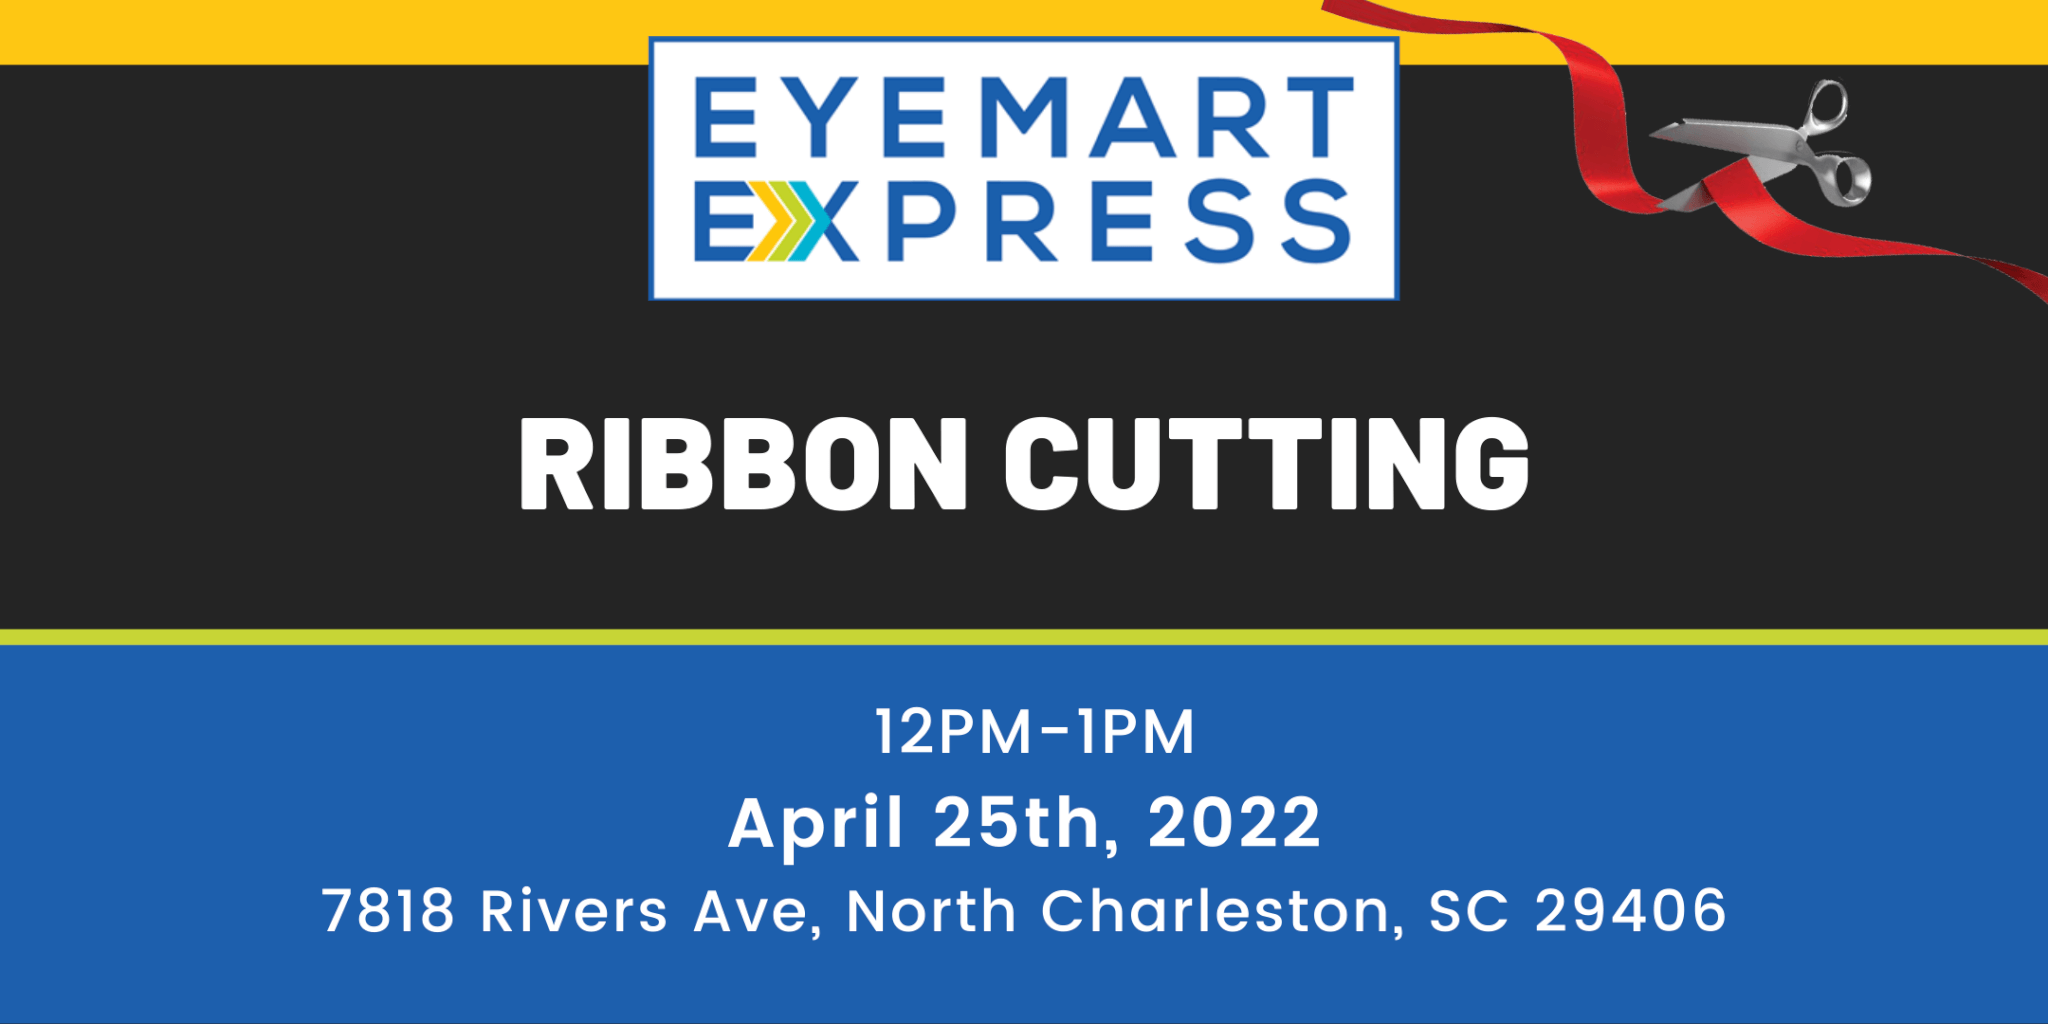 Eyemart Express Ribbon Cutting